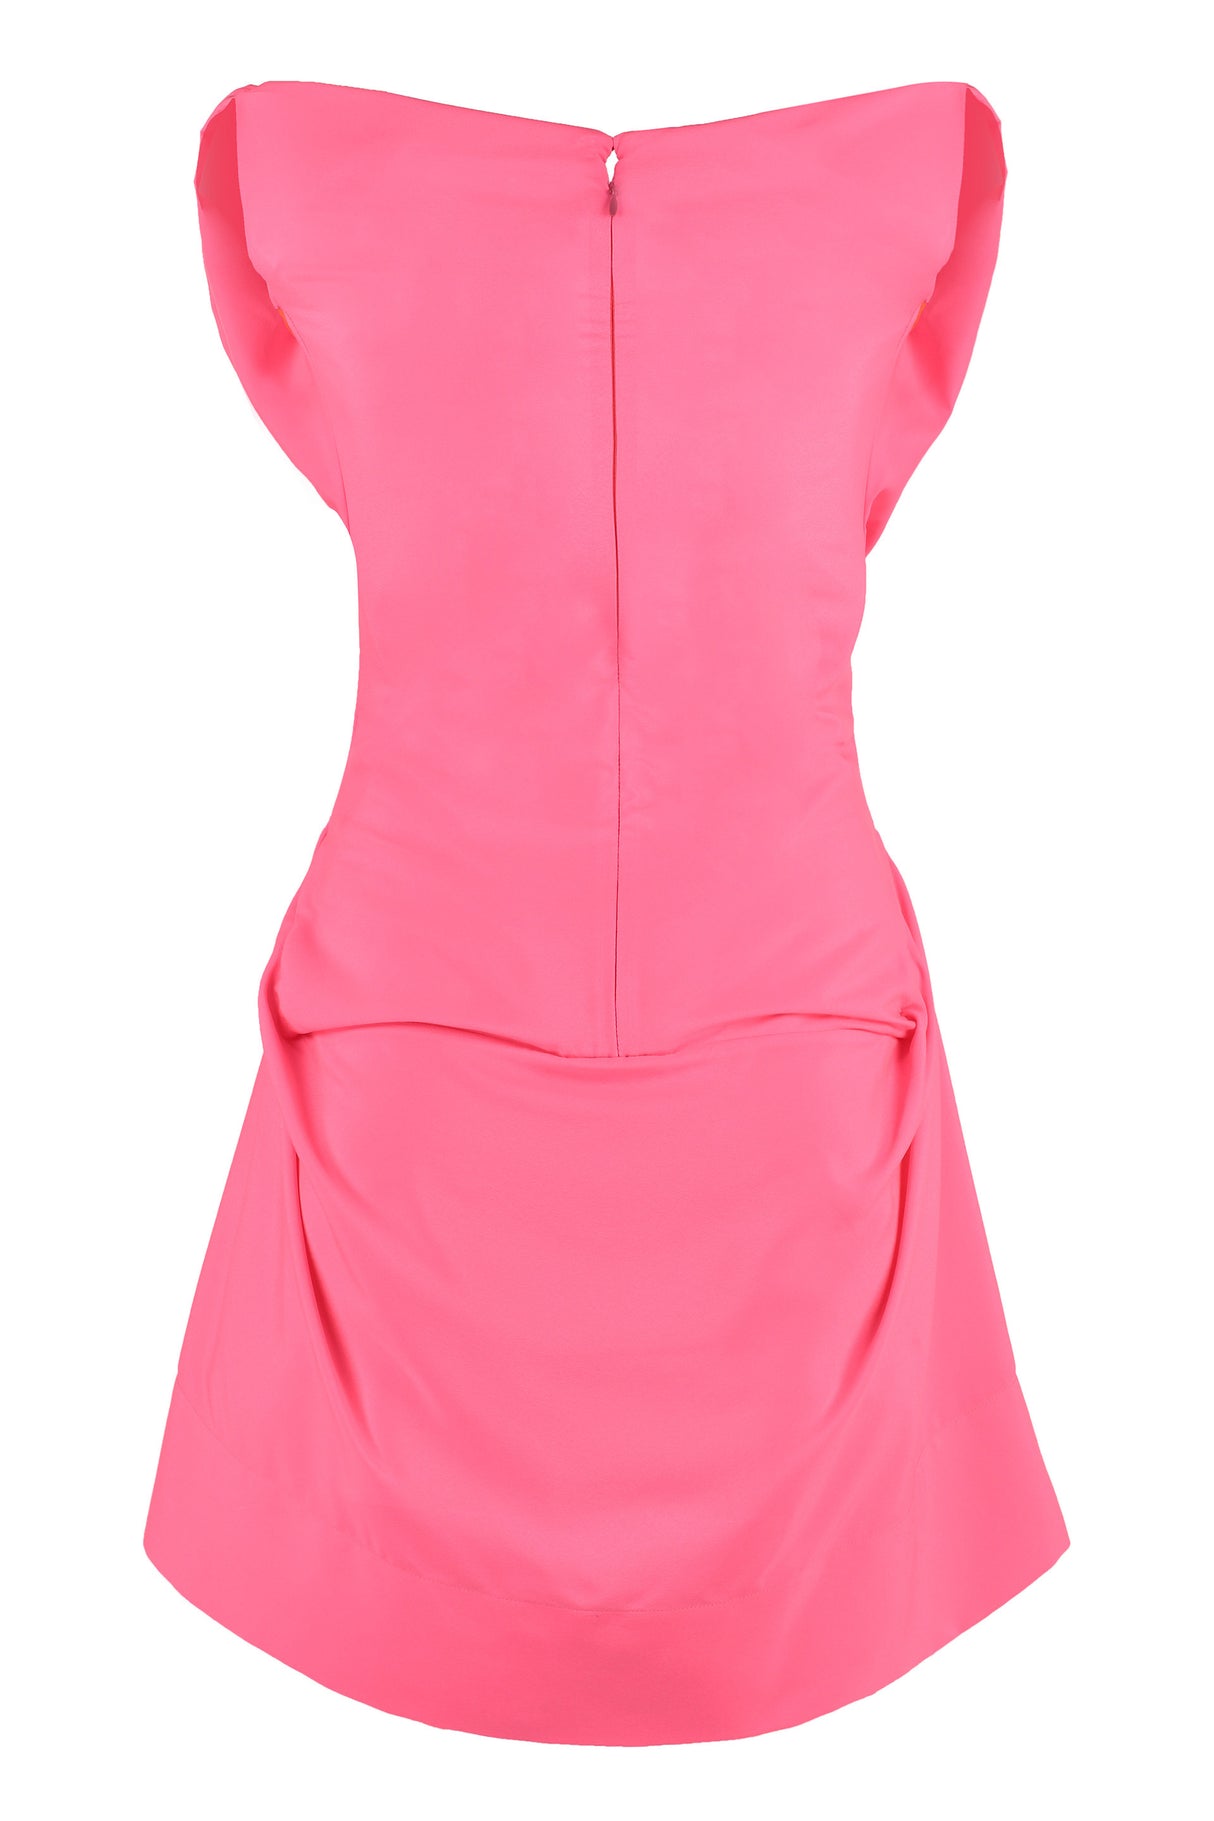 VIVIENNE WESTWOOD Modern Asymmetrical Pink Corset Dress